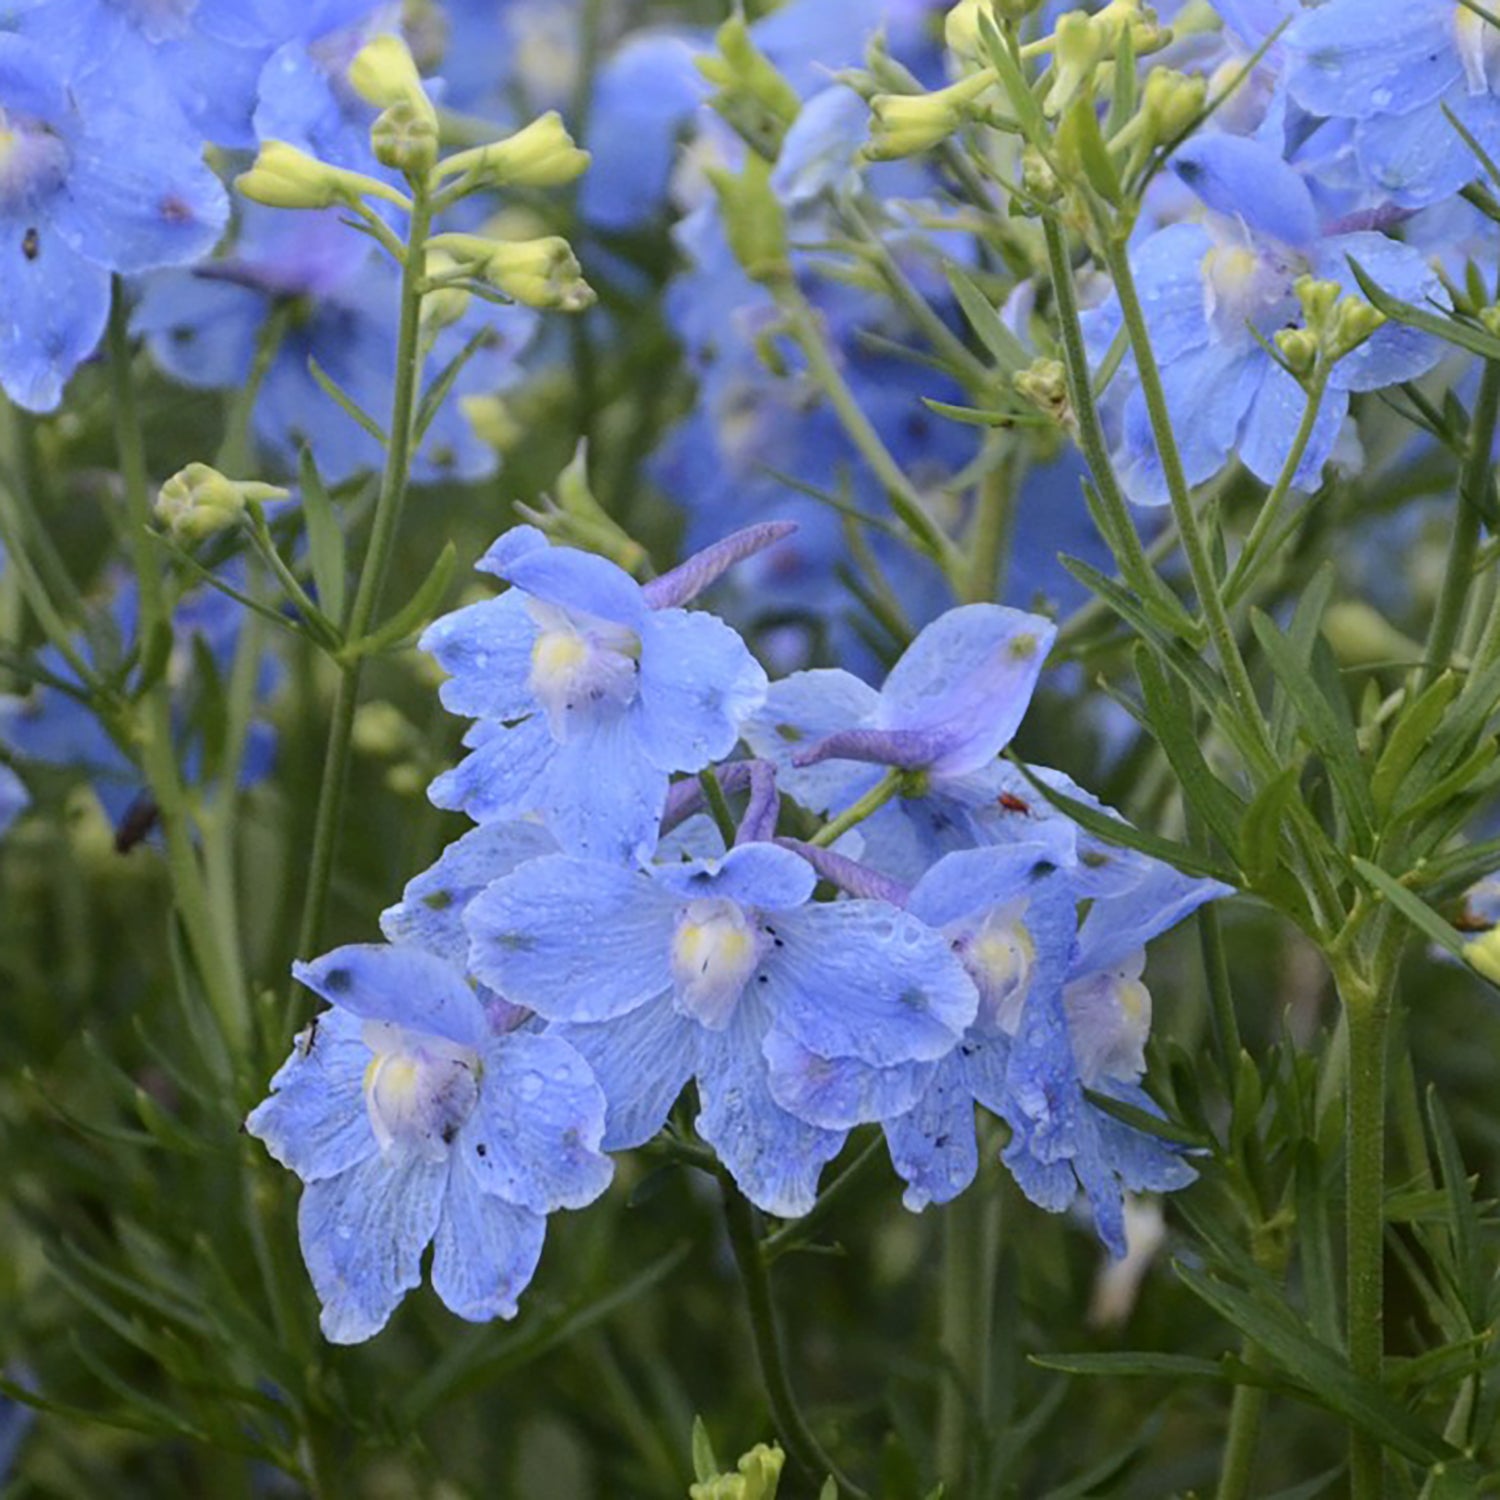 Image of Summer blues larkspur flower in full bloom